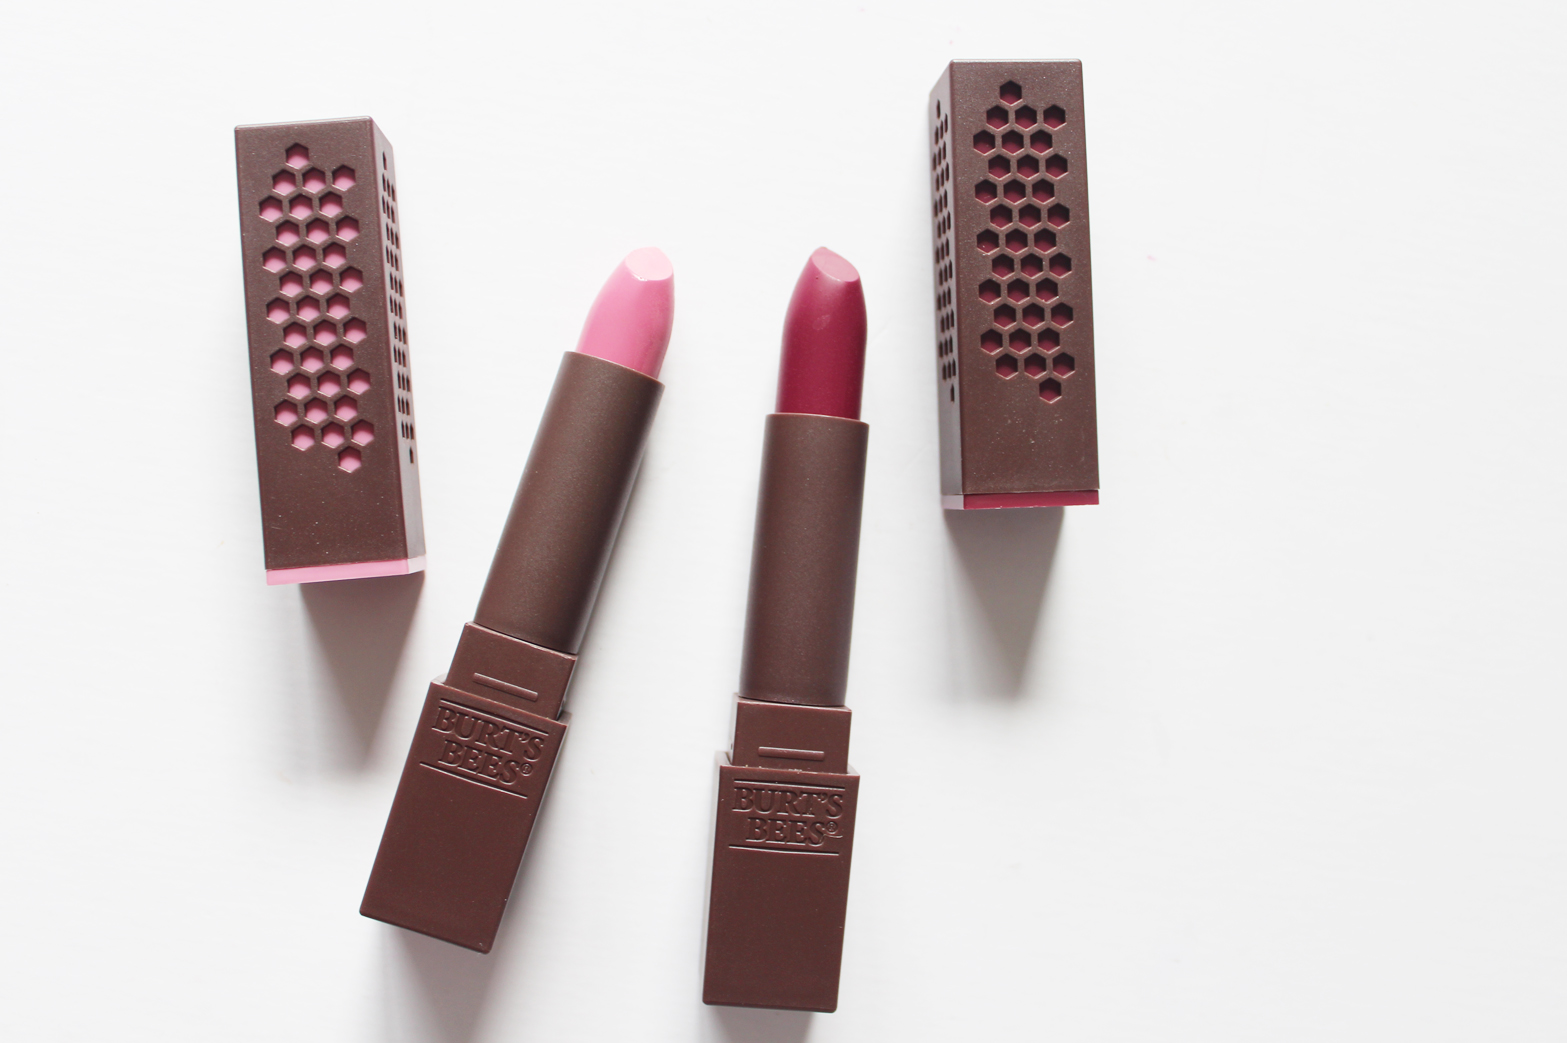 BURT'S BEES | Introducing The New Lipstick Range - Review + Swatches - CassandraMyee